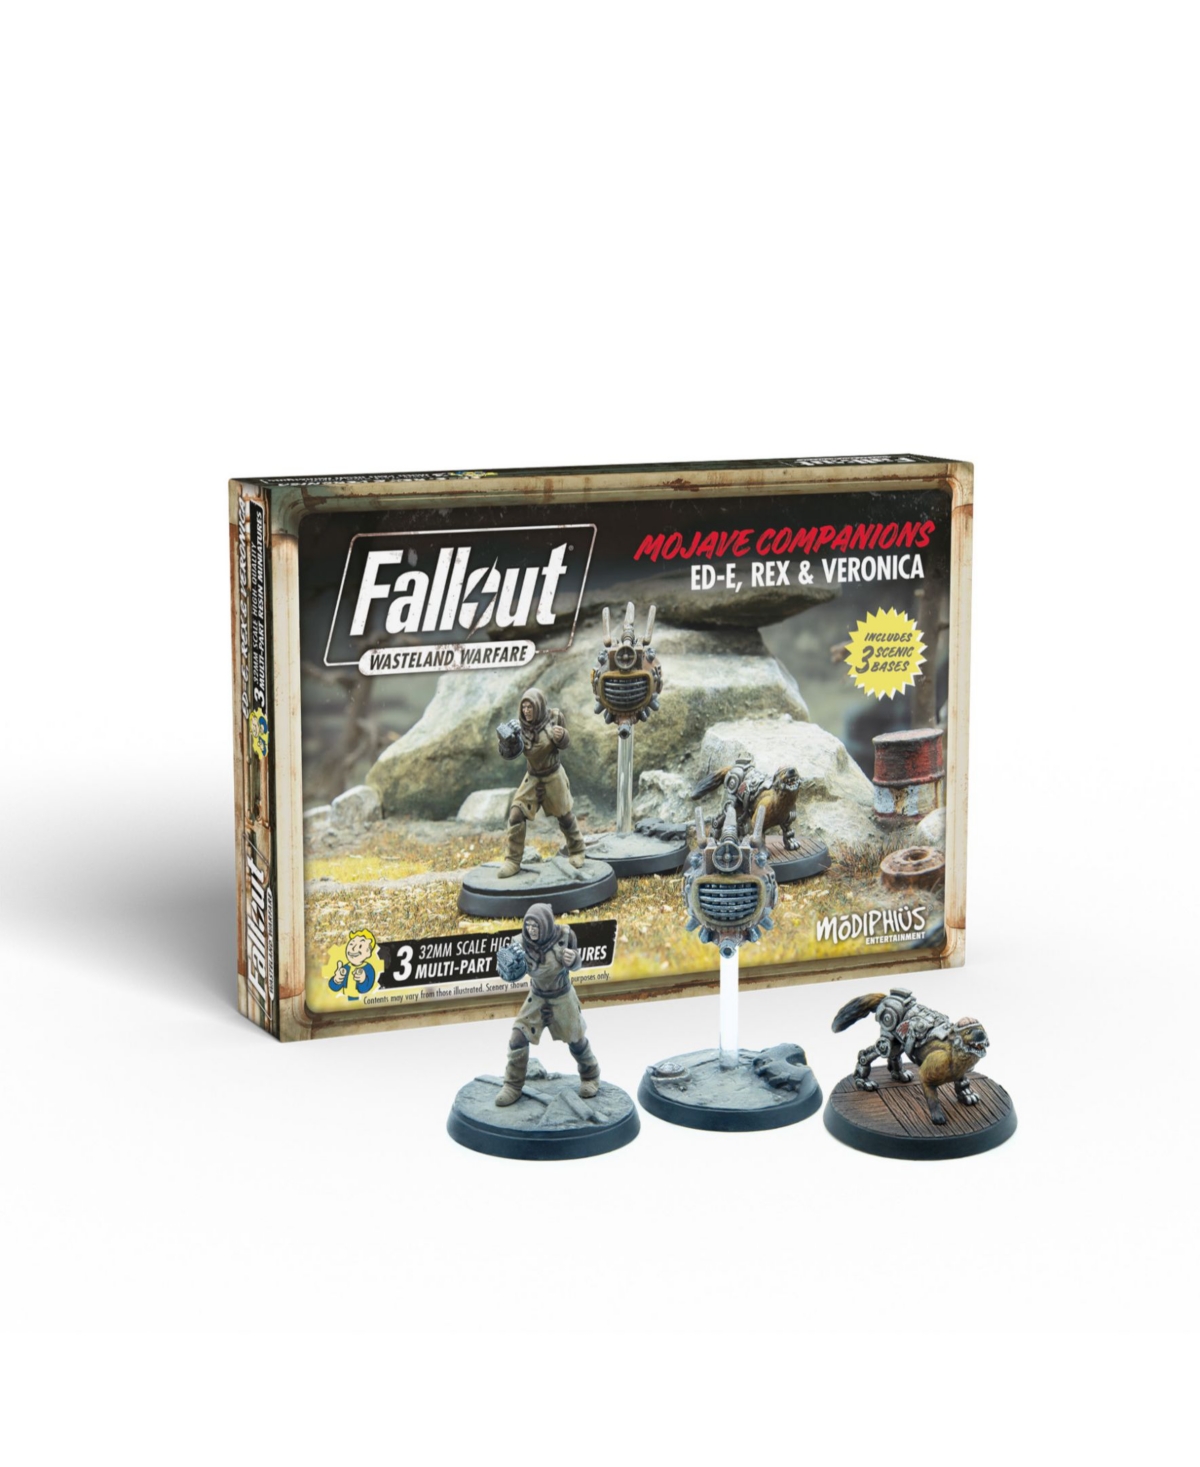 Modiphius Fallout Â Wasteland Warfare Ed-e, Rex And Veronica In Multi